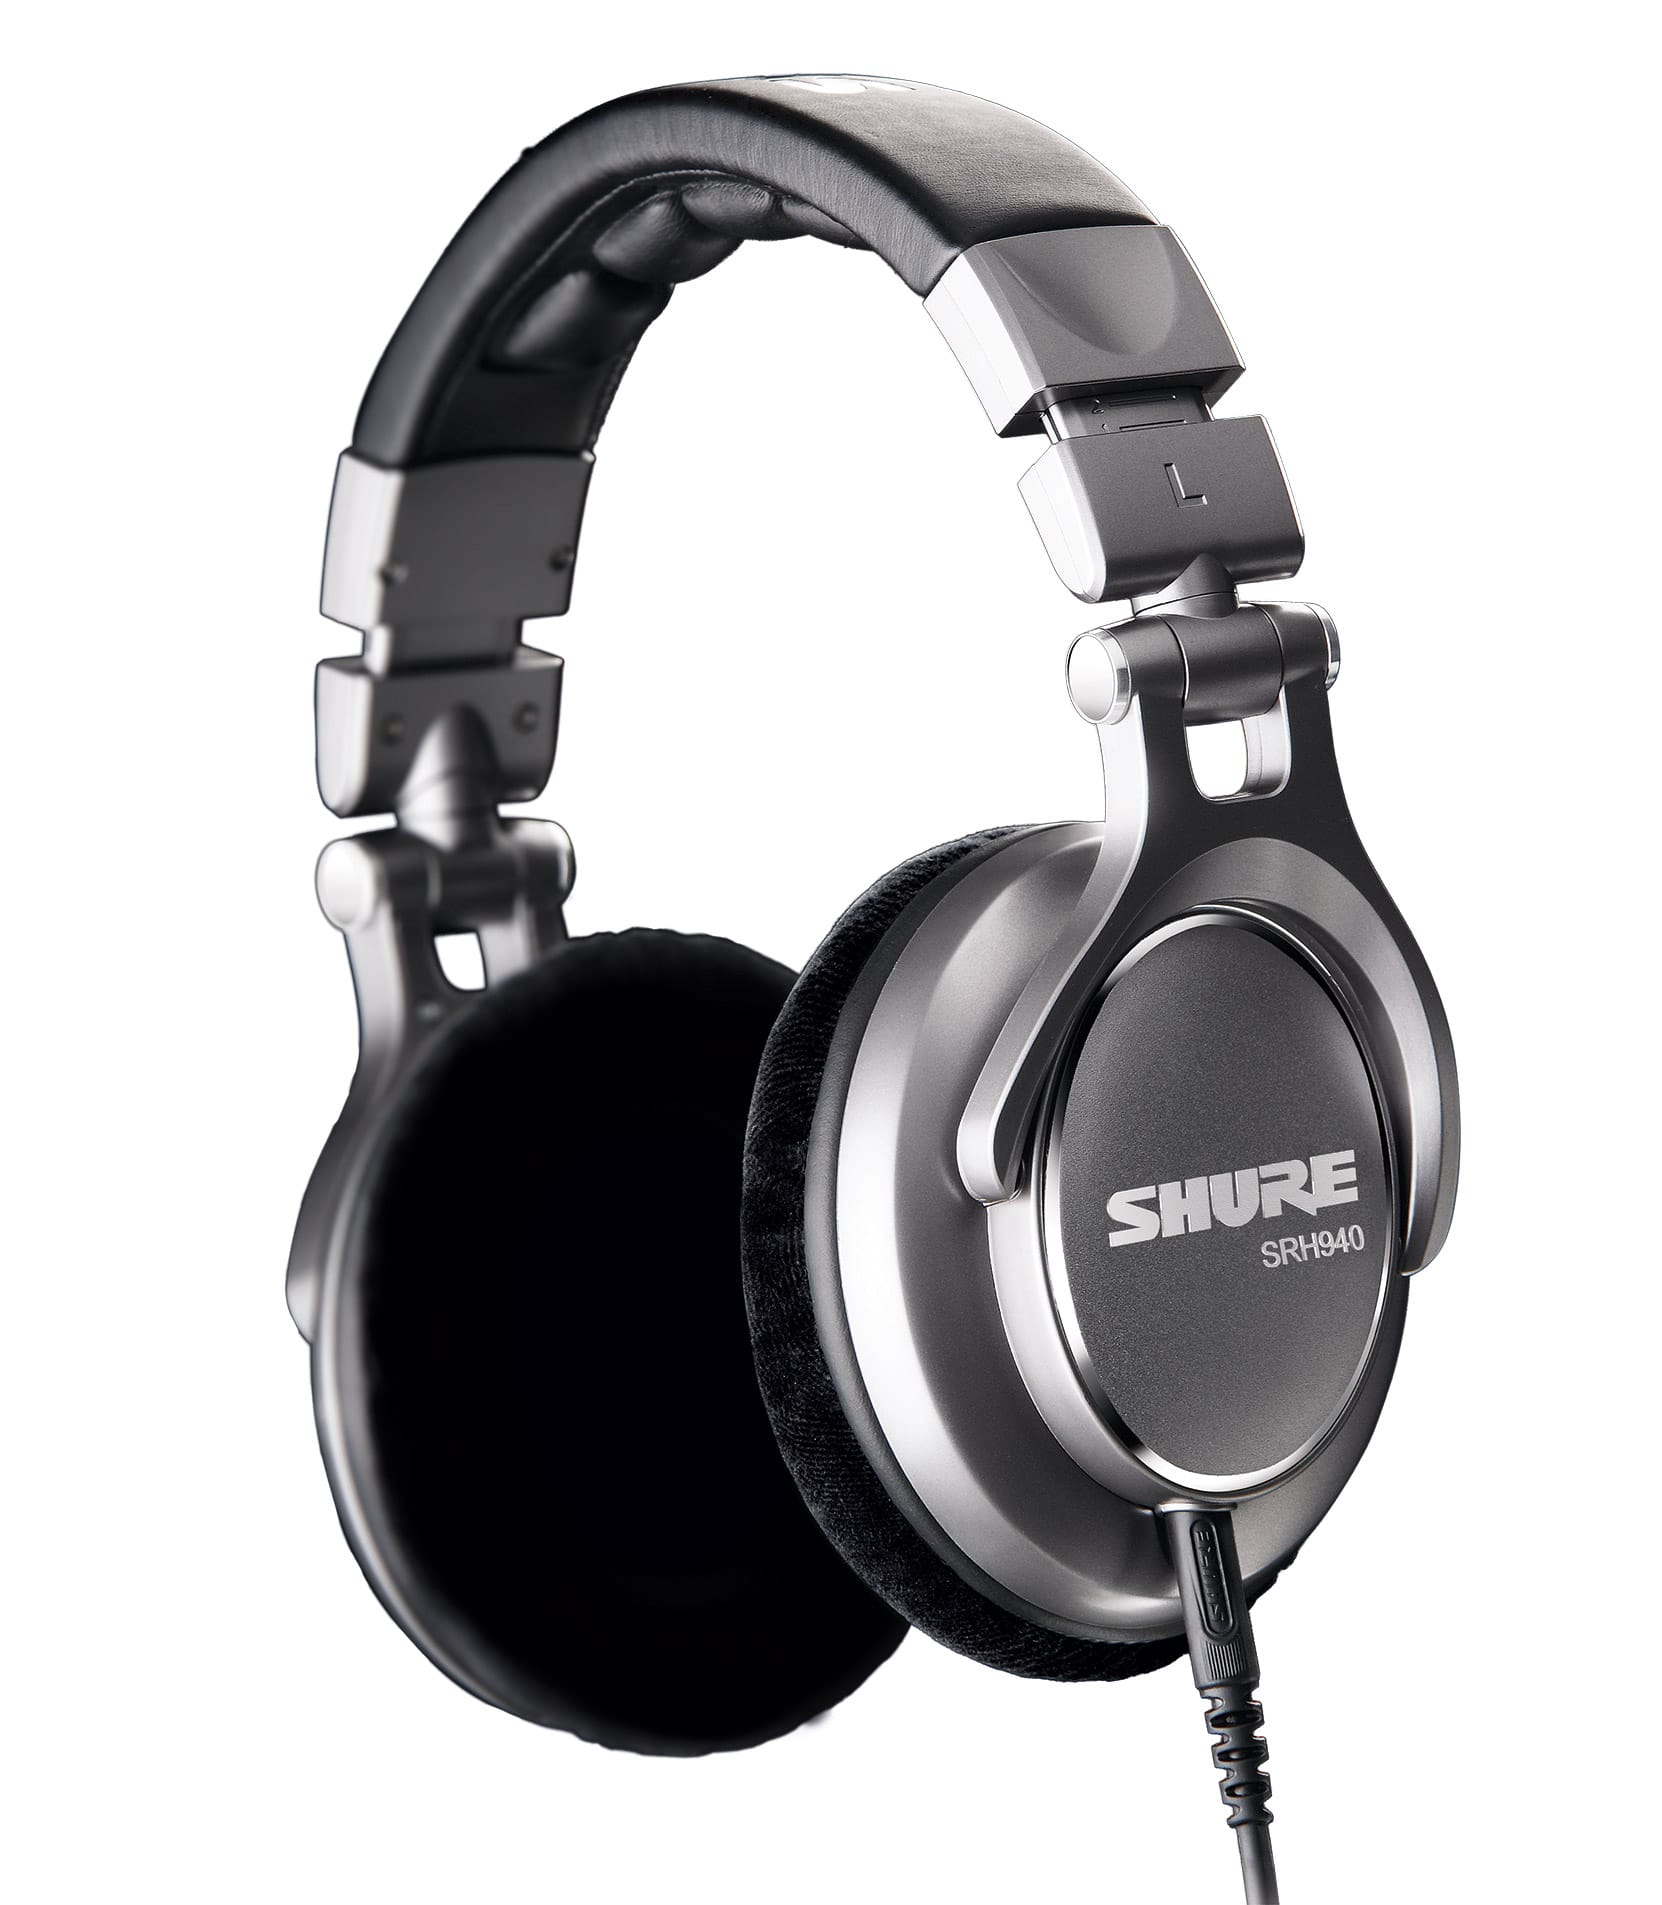 Shure - SRH940 E Professional Reference Headphones